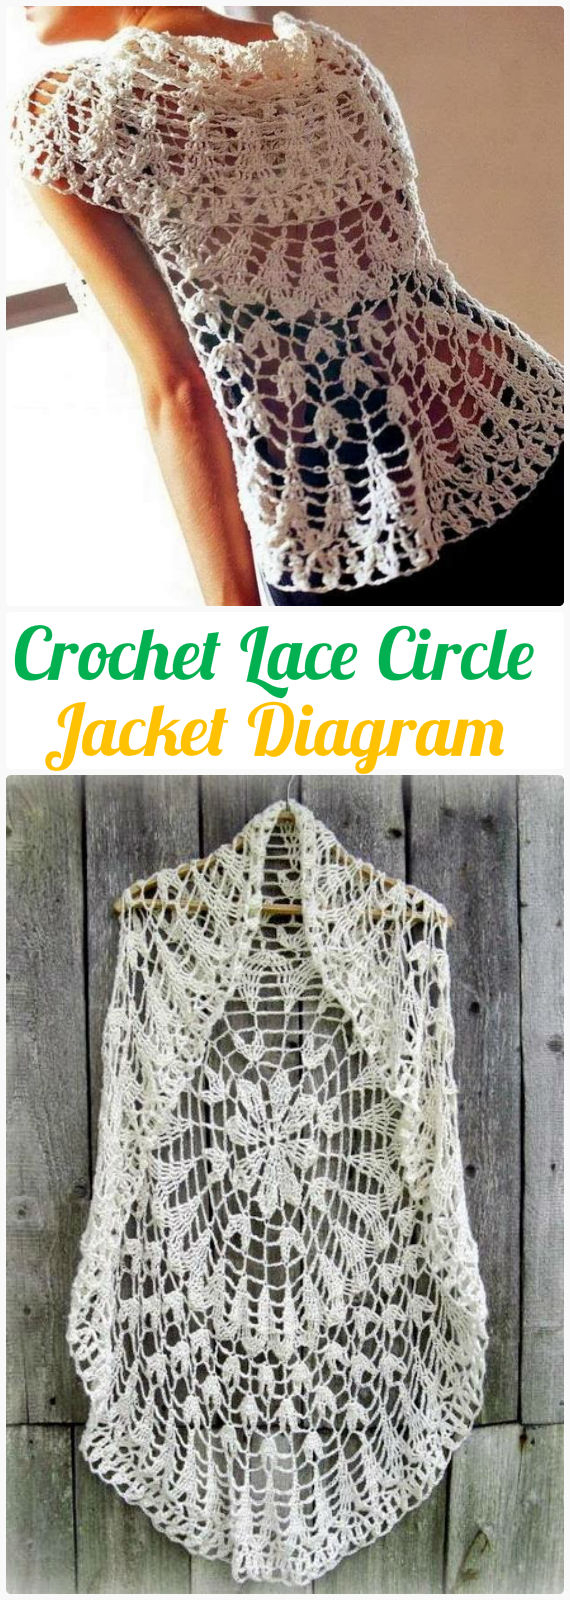 Free Crochet Lace Cardigan Pattern Diy Crochet Circular Vest Sweater Jacket Free Patterns